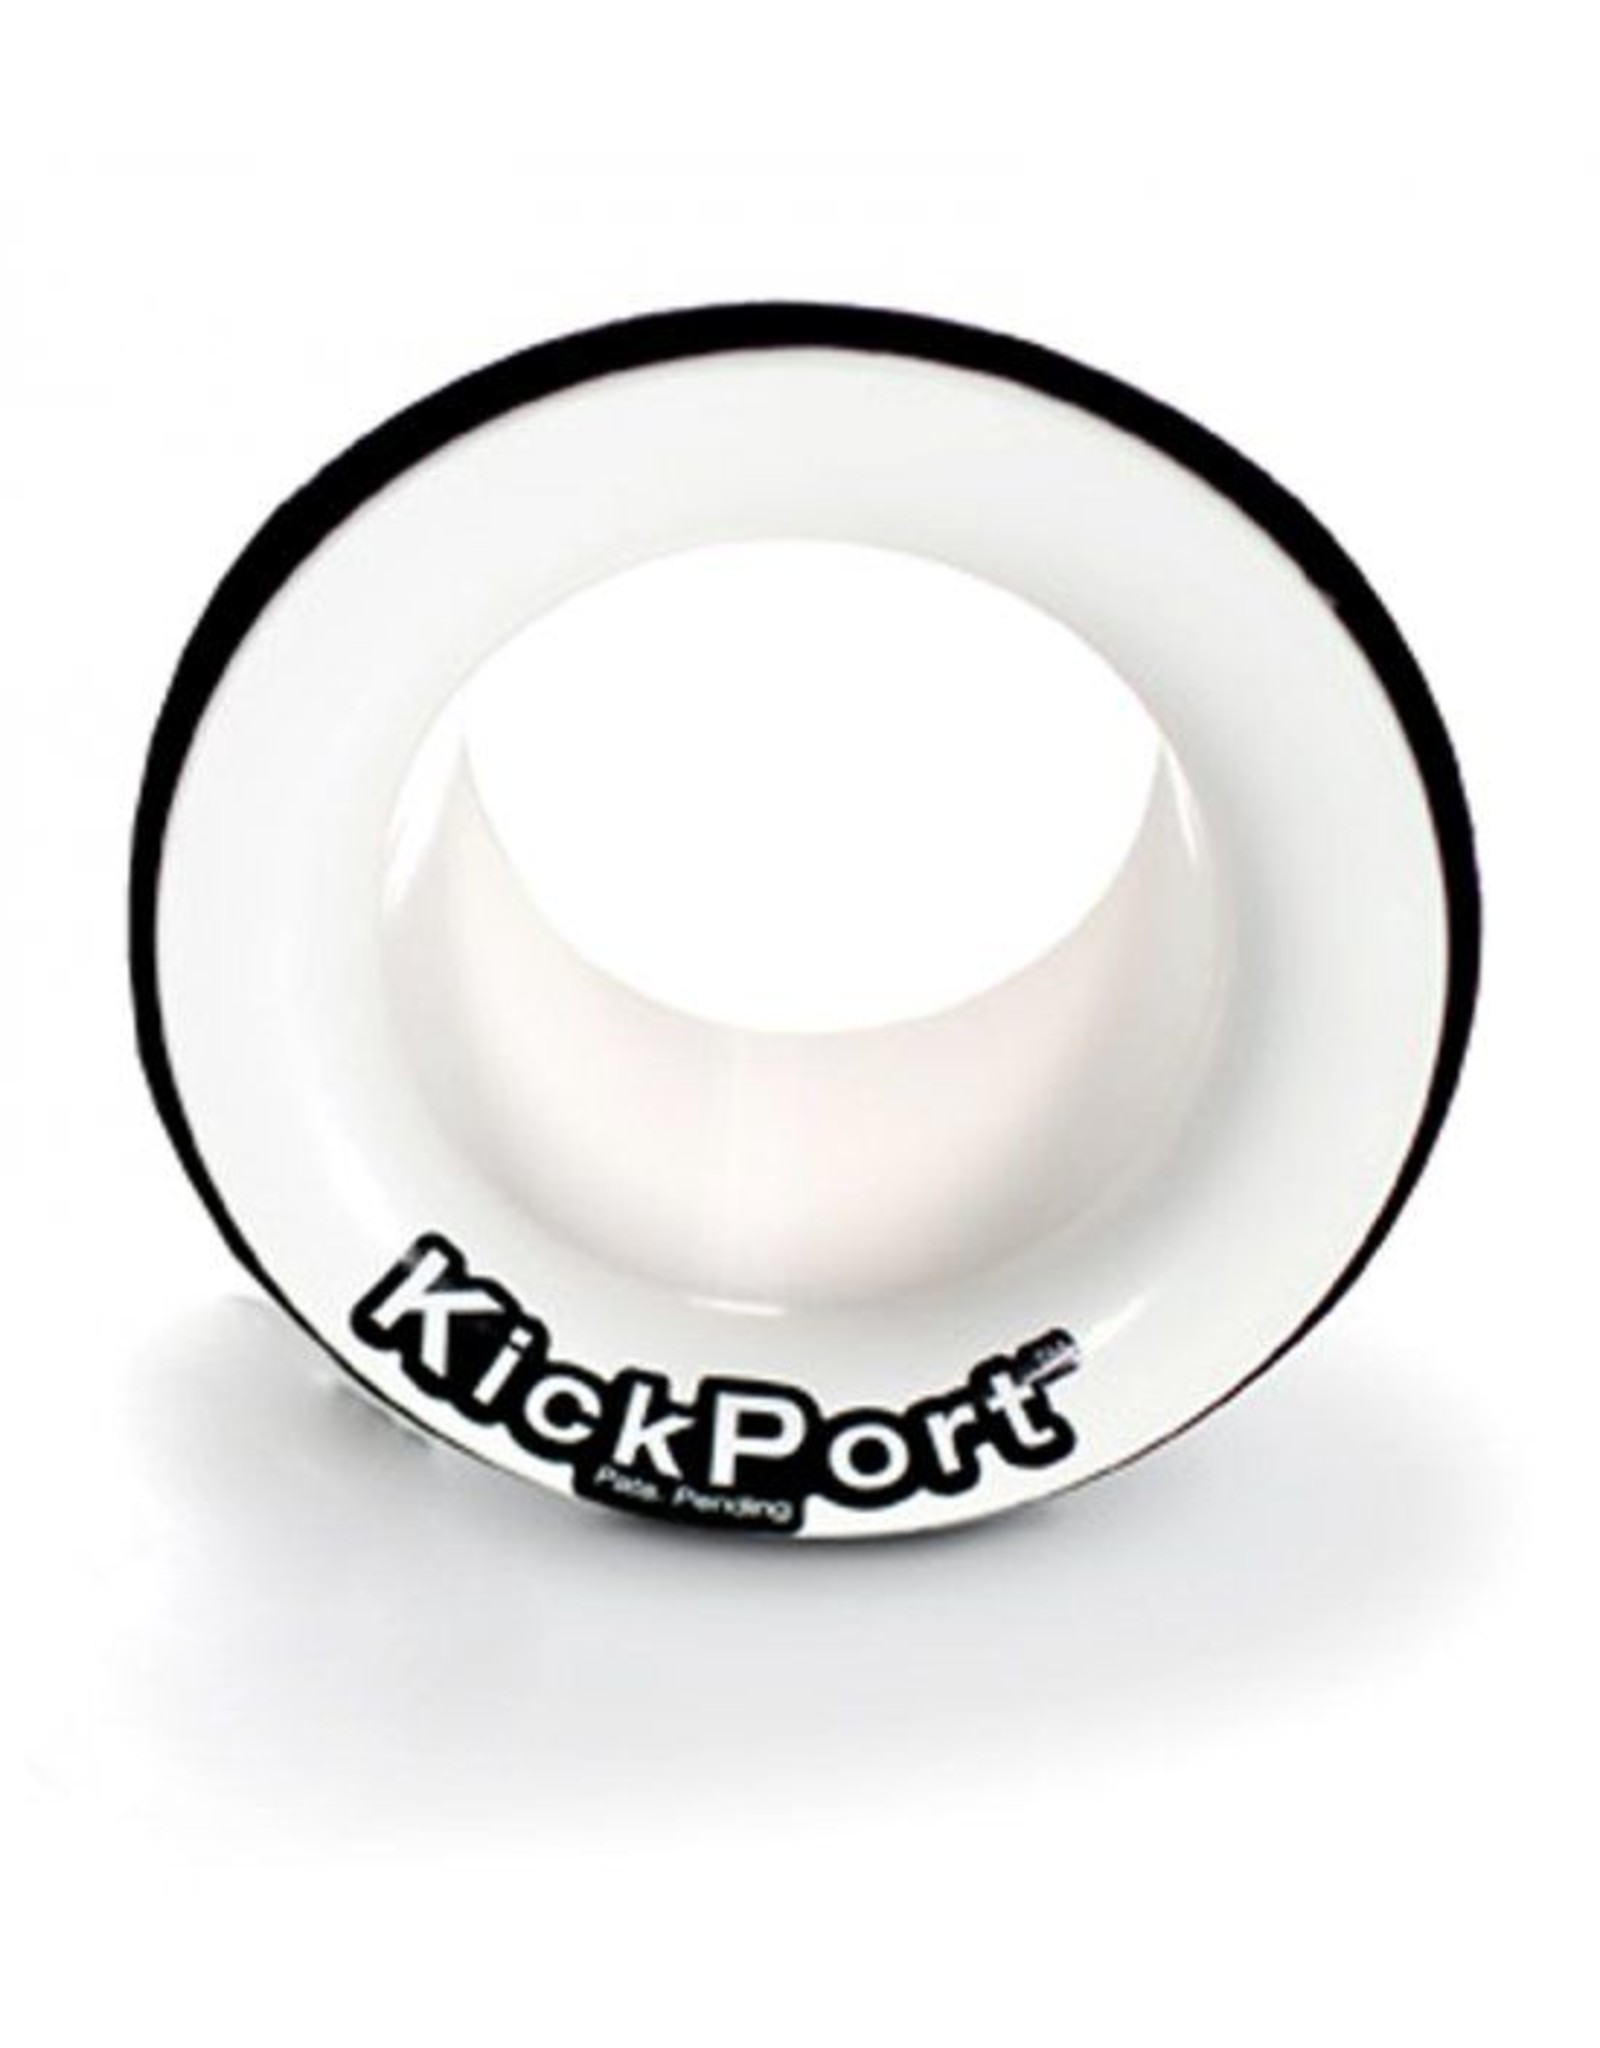 Kickport  KP2_SS SILVER SAND damping control bass booster